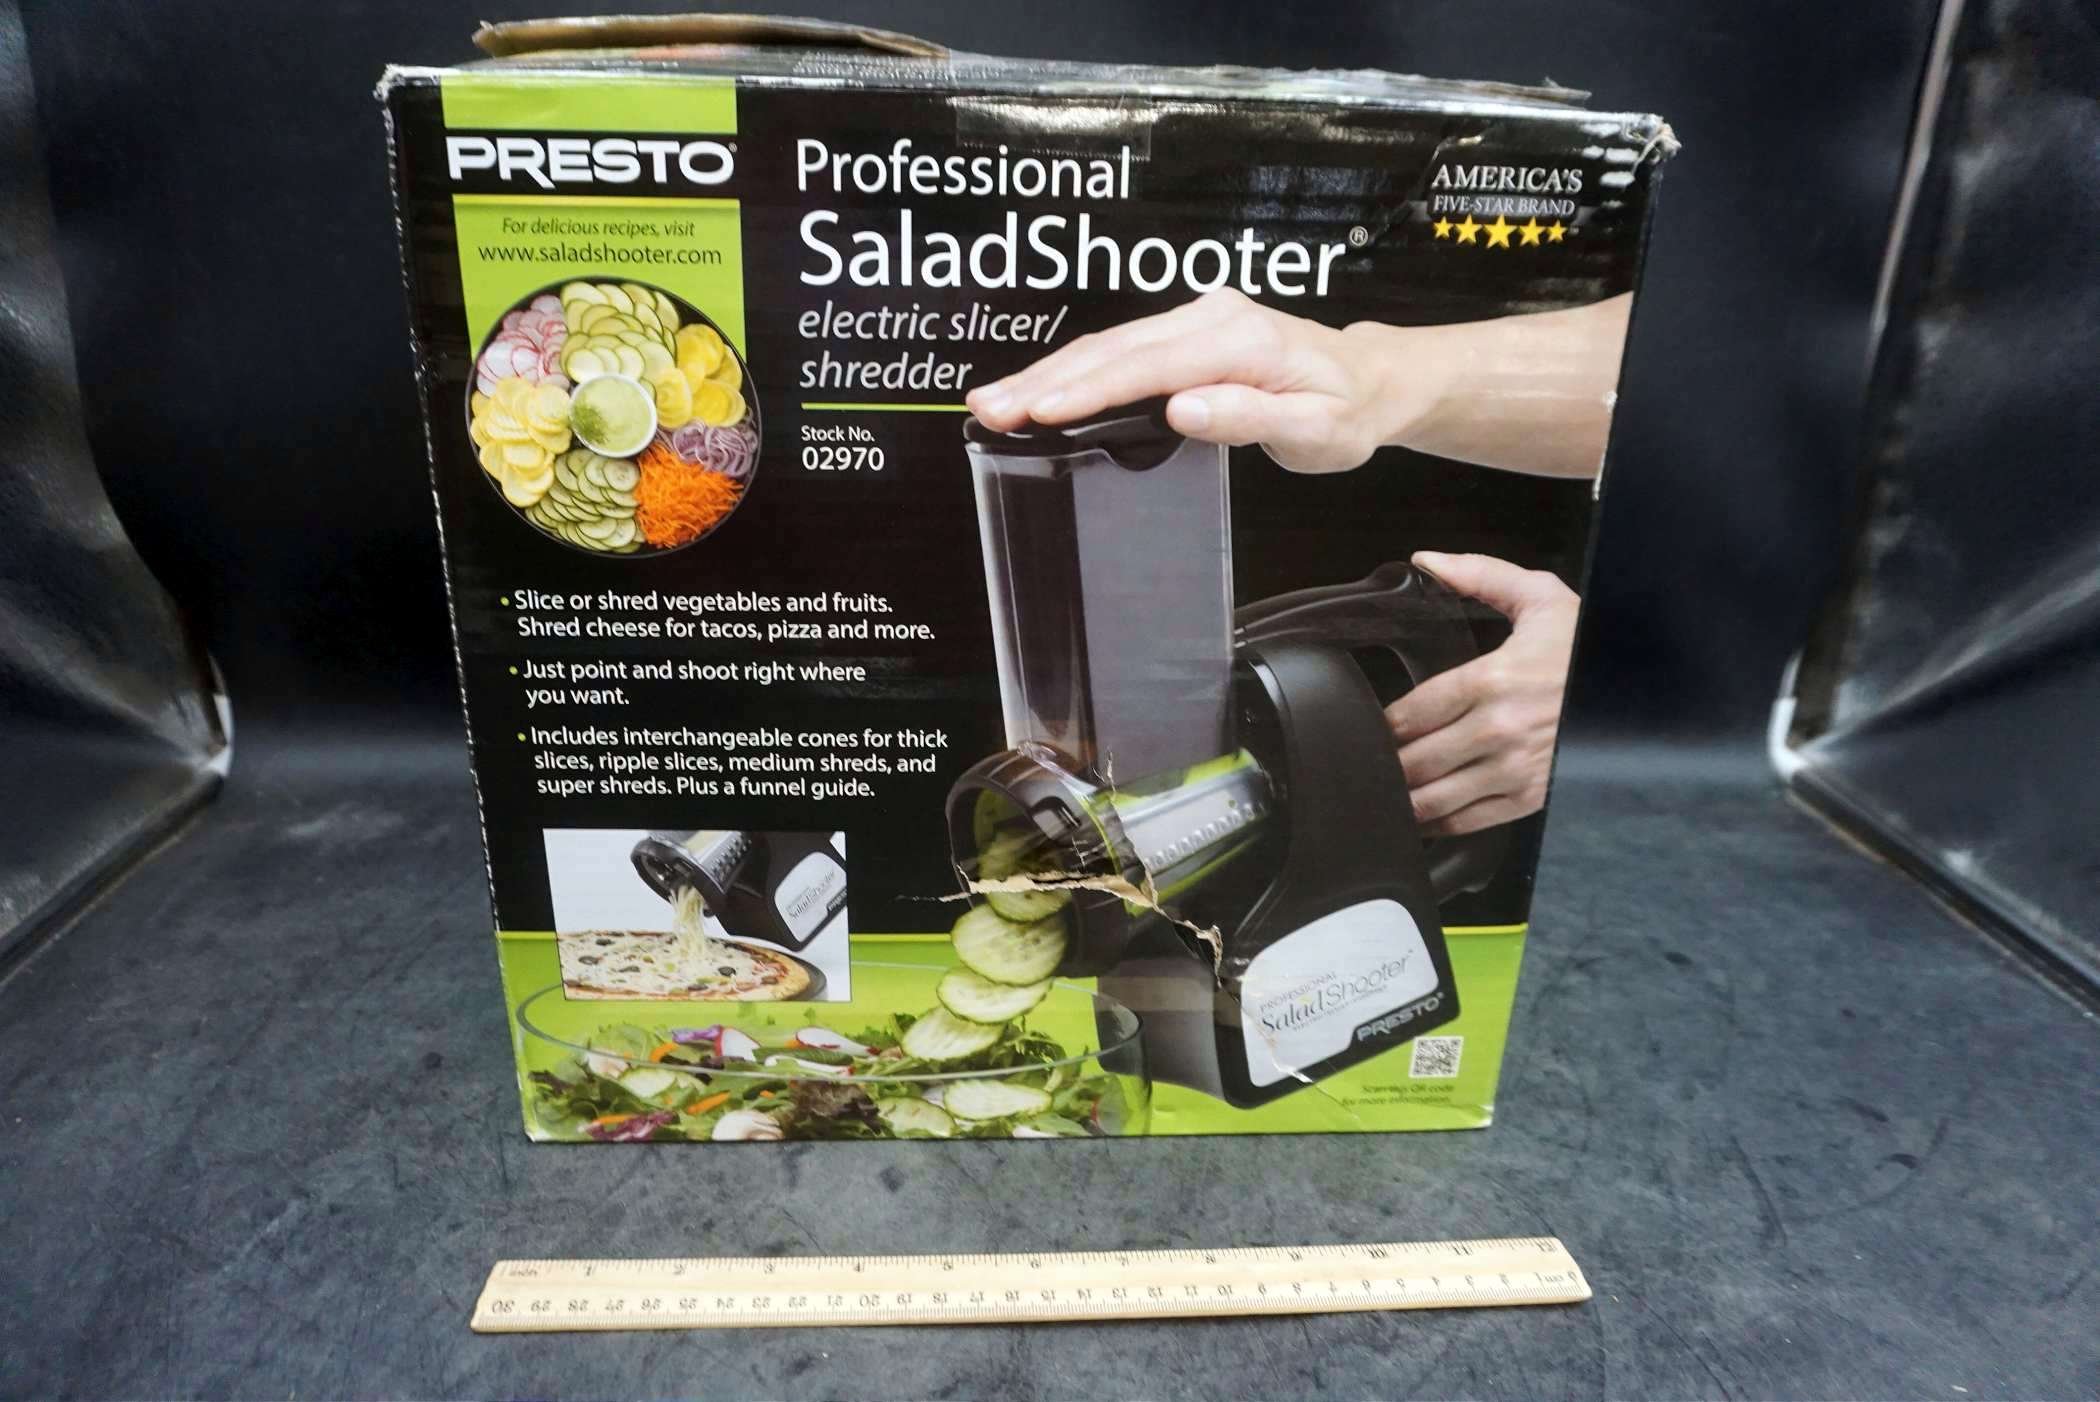 Presto Professional SaladShooter Electric Slicer & Shredder With